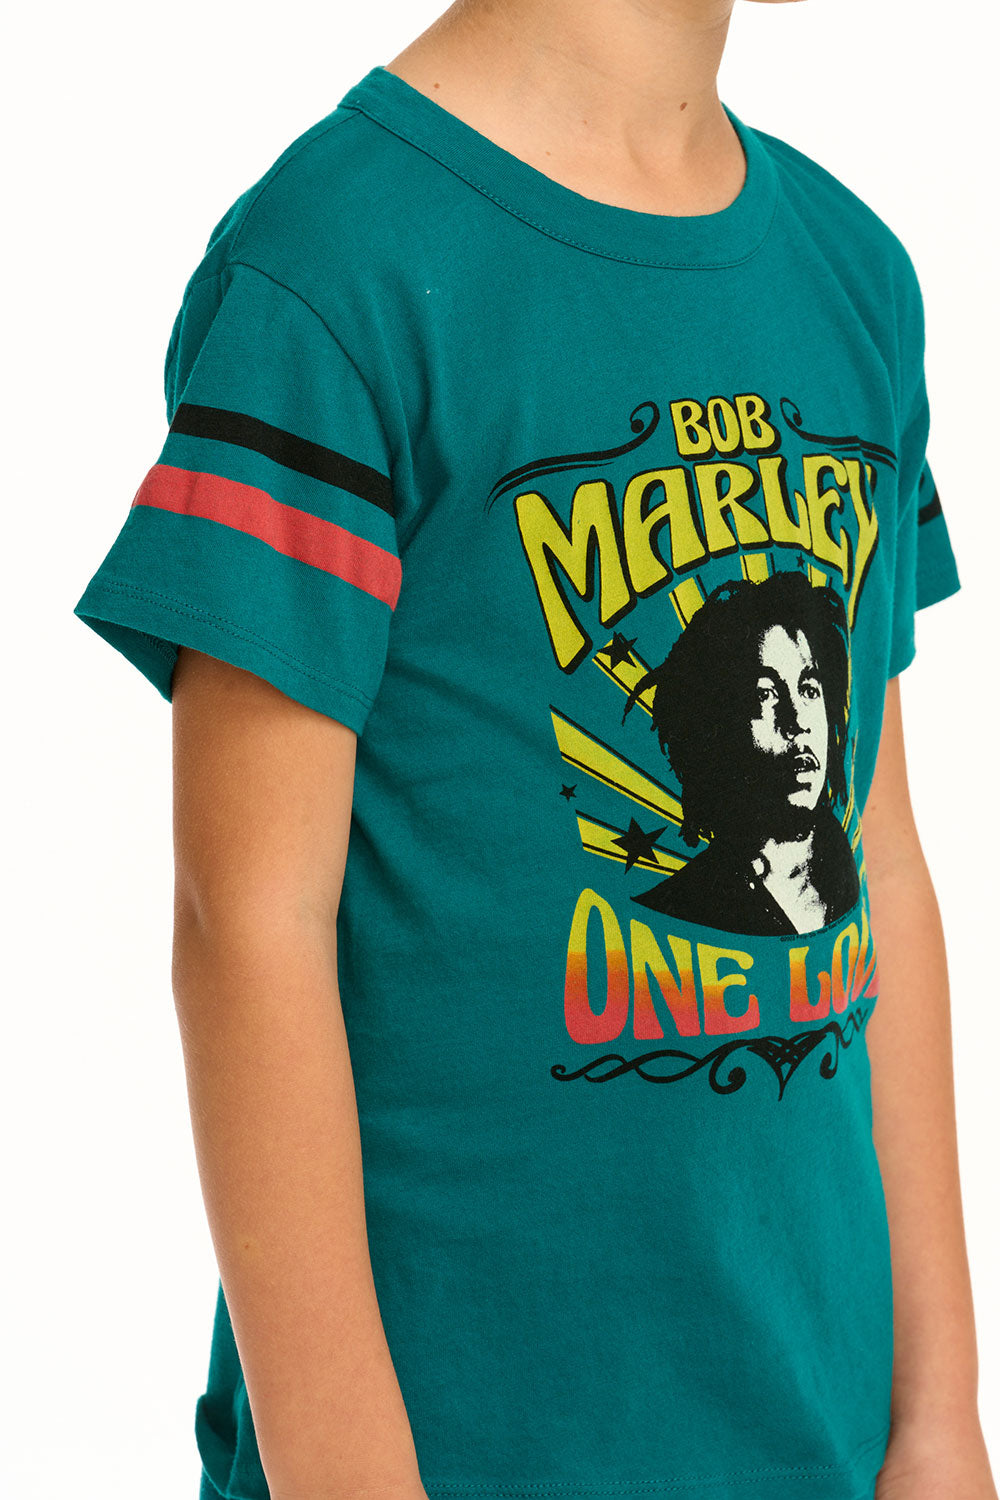 Bob Marley - One Love Tee BOYS chaserbrand